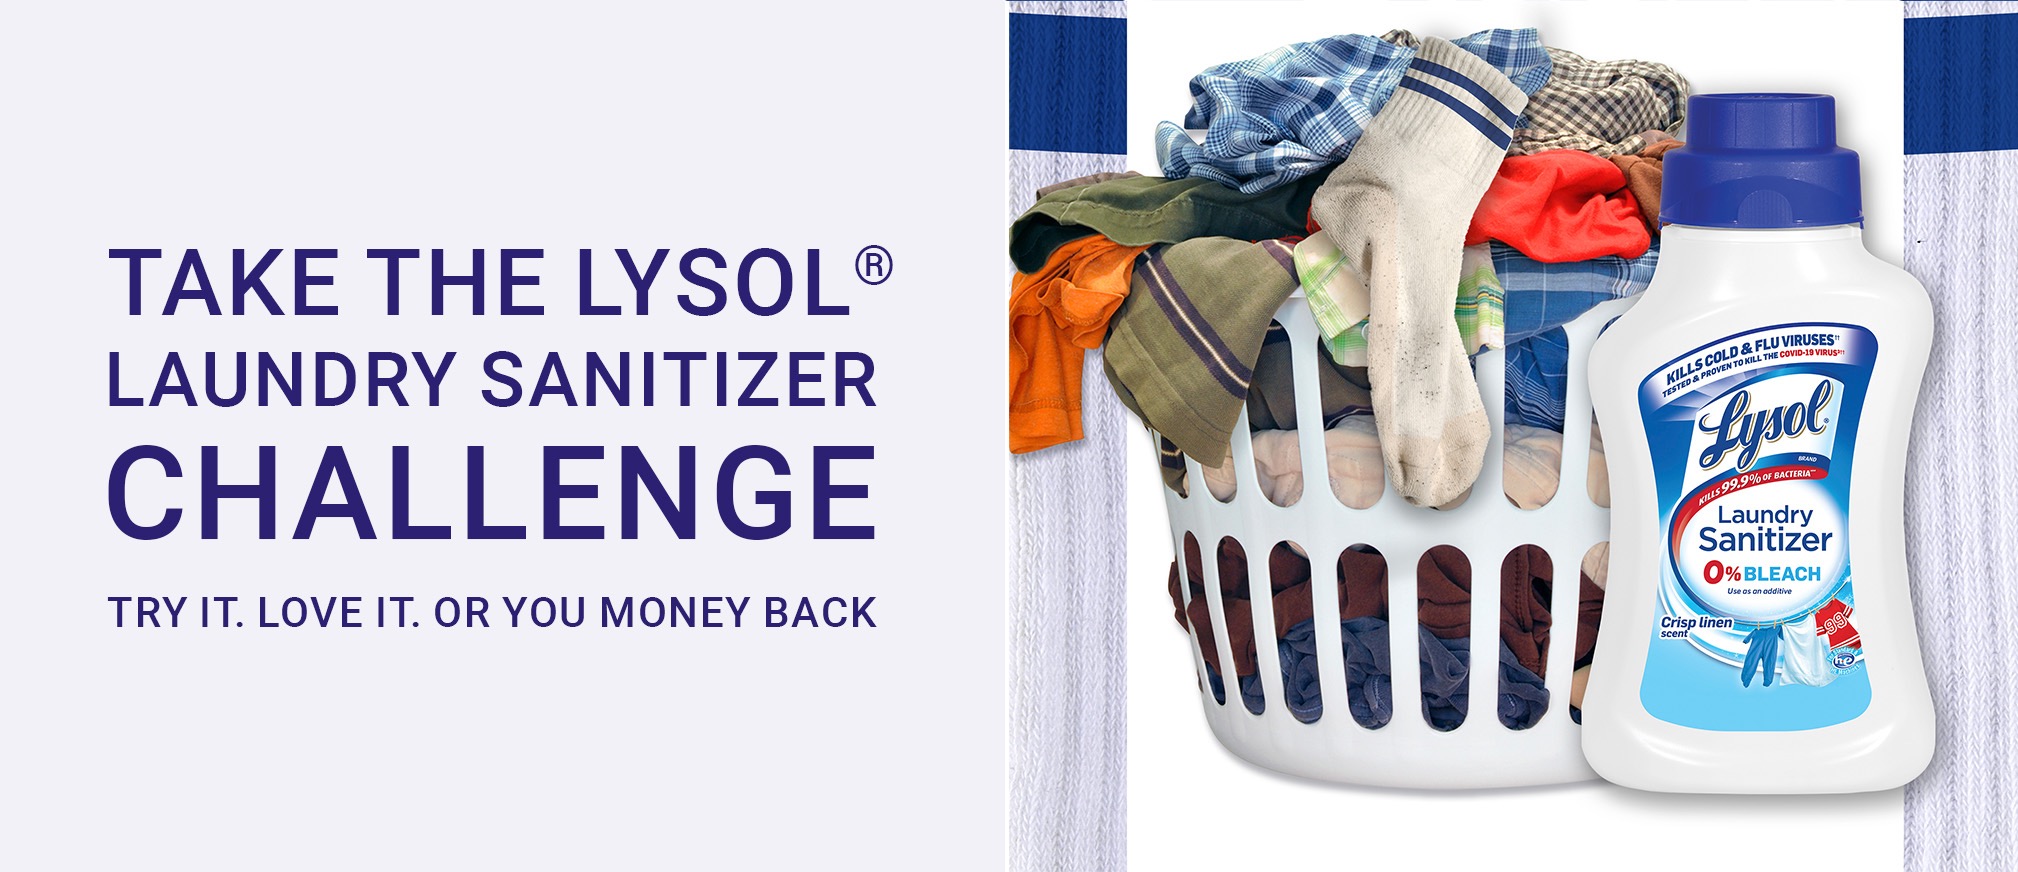 lysol-laundry-sanitizer-money-back-guarantee-rebate-offer